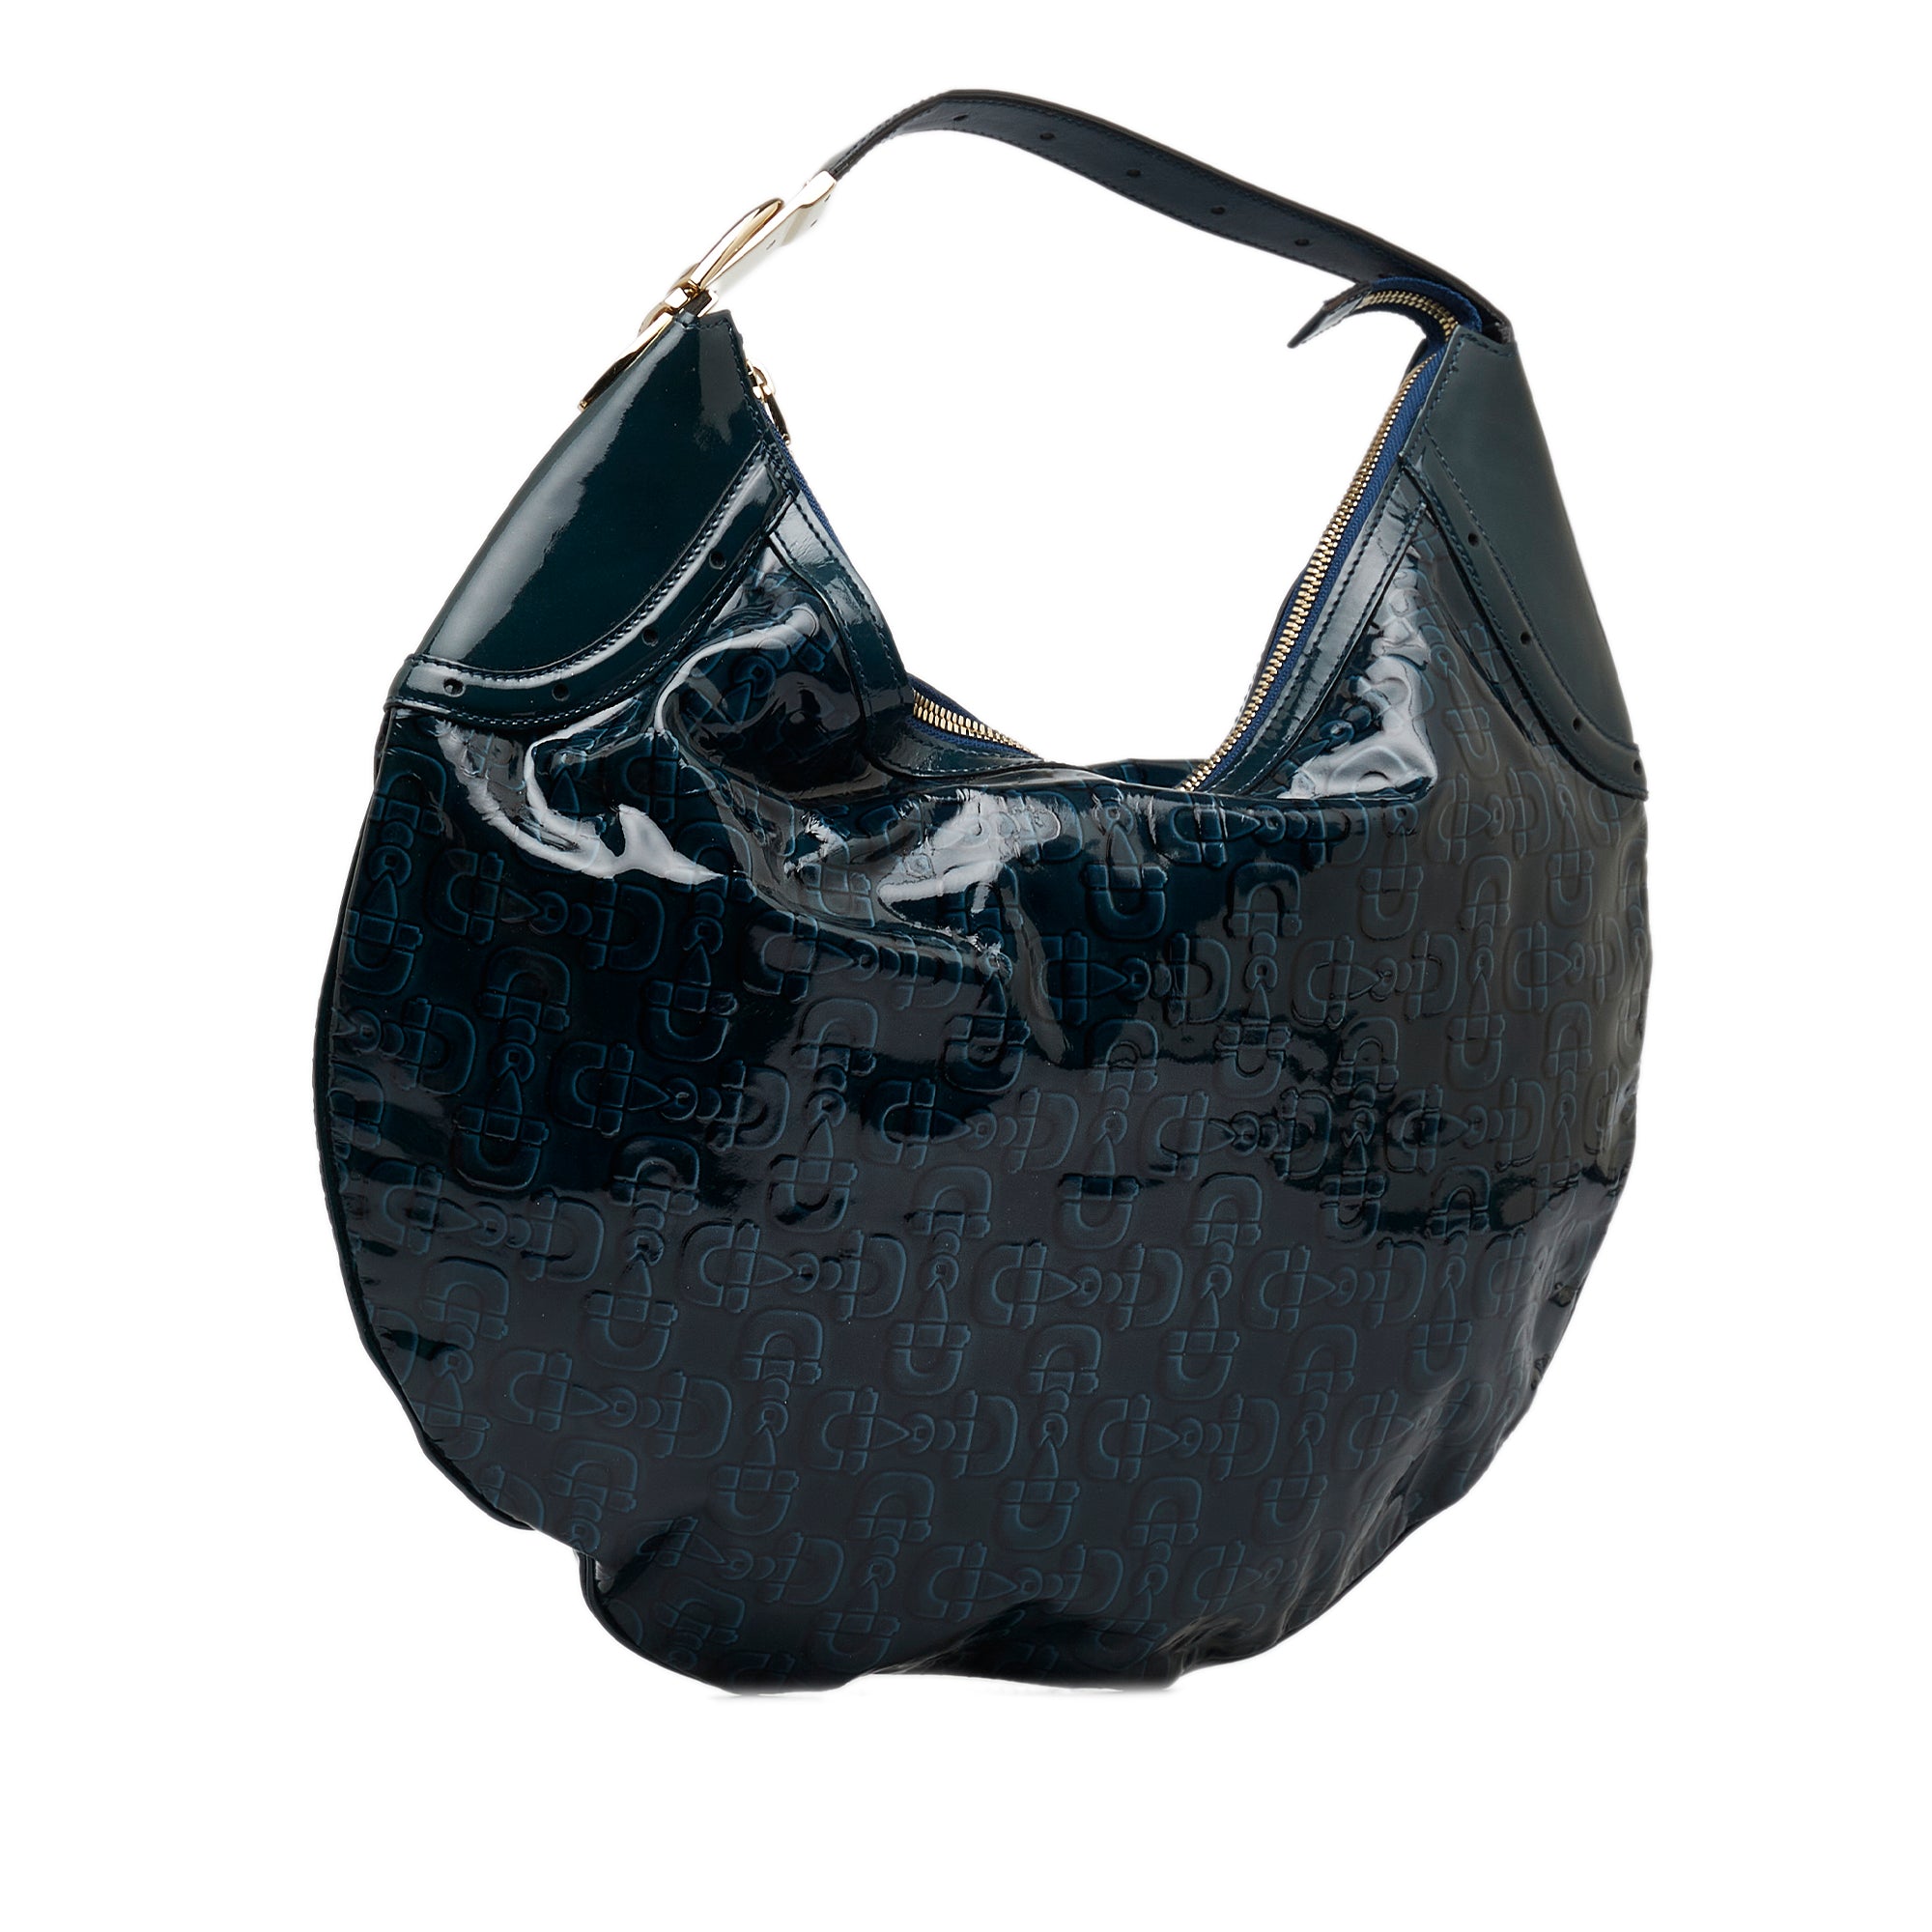 Purple Holographic CC Chanel Bag 3D Handbag Party Bag